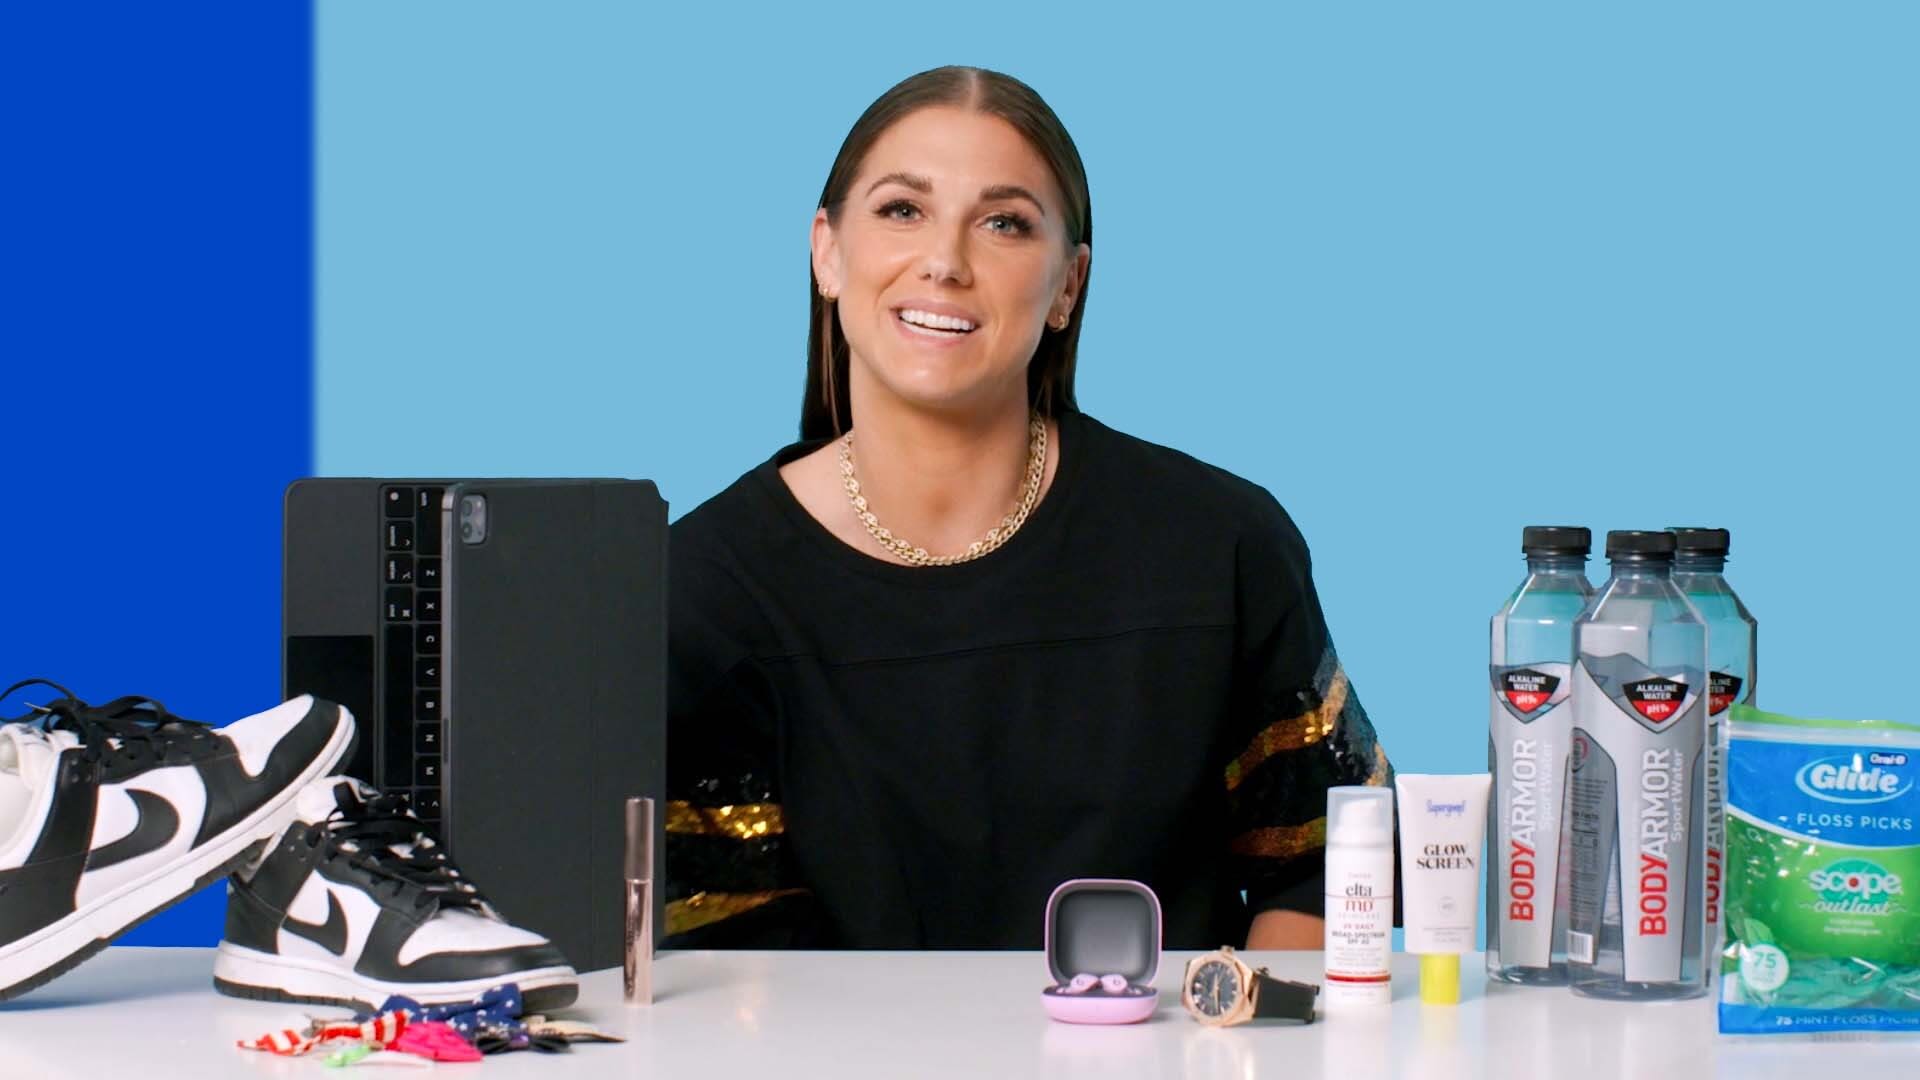 Watch Meghan Trainor's 10 Minute Beauty Routine for Zoom Meetings